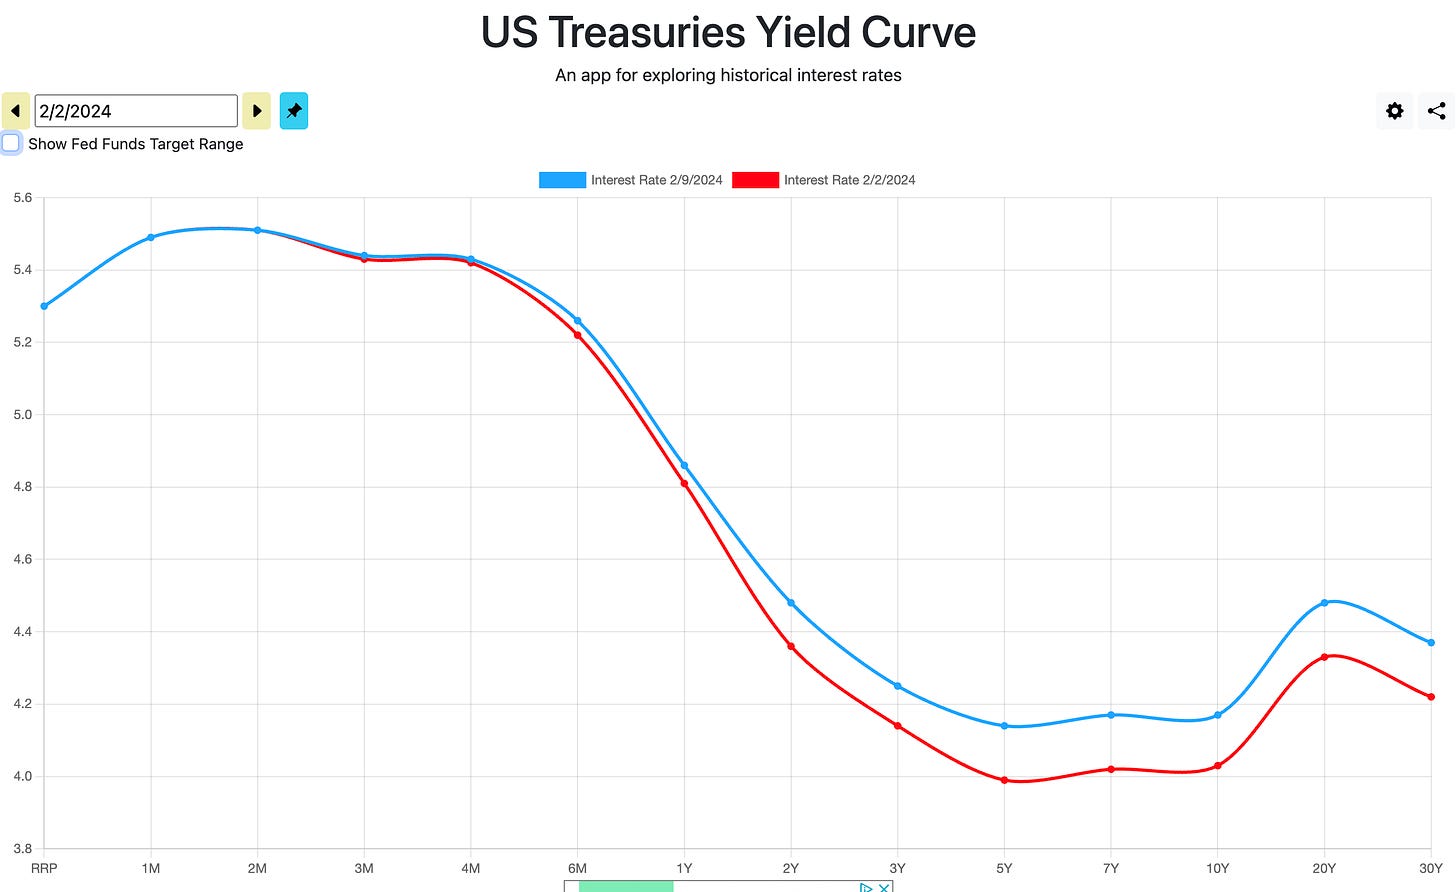 US Treasury Yield curve via ustreasuryyieldcurve.com